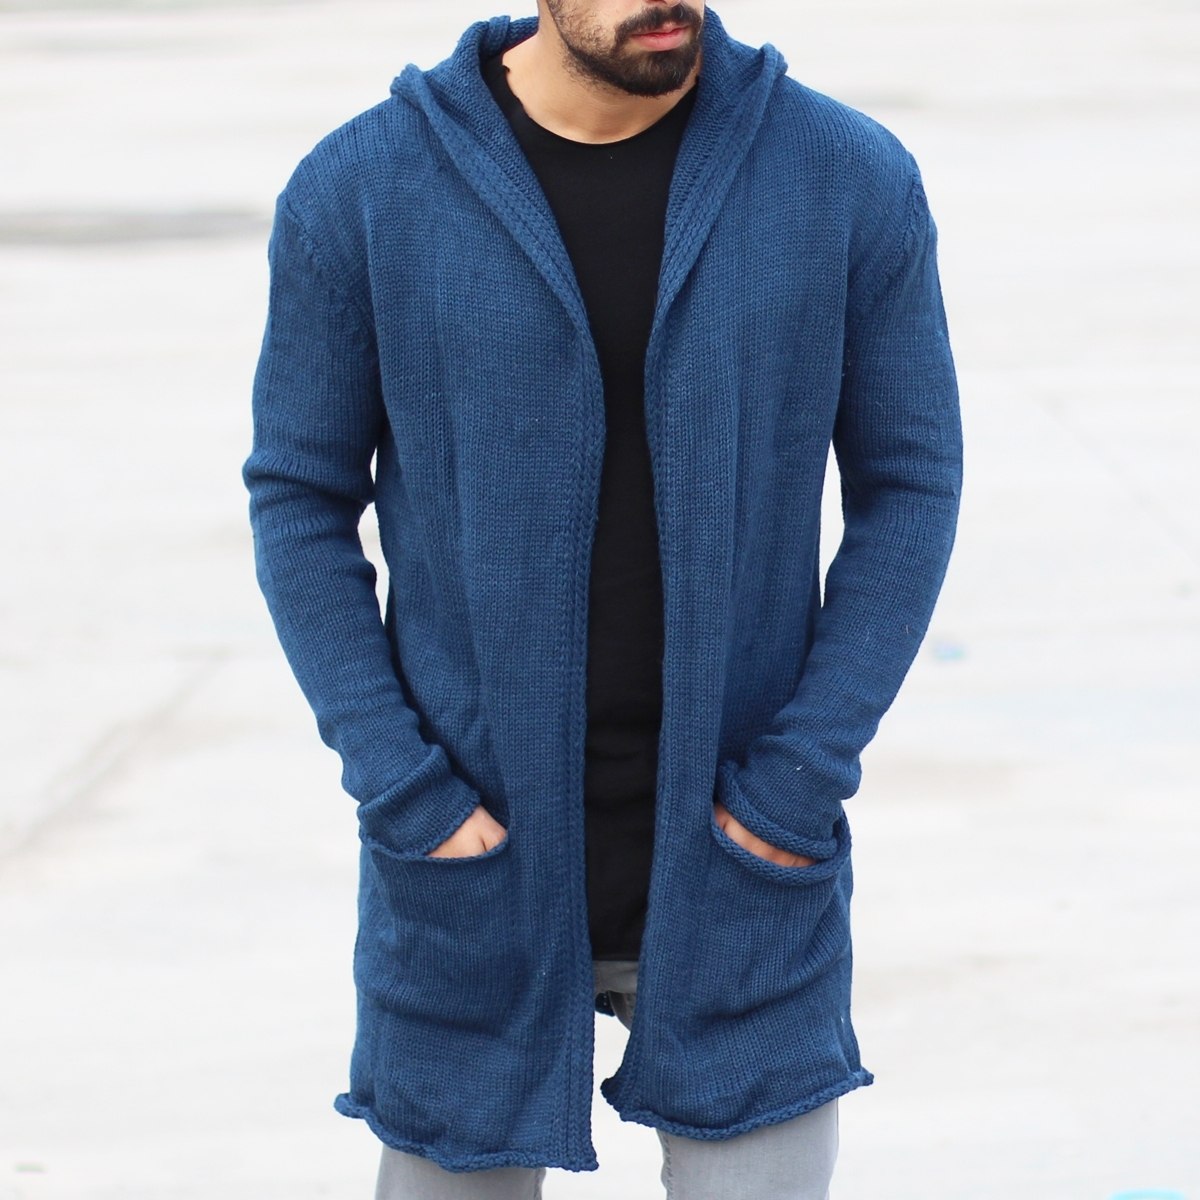 blue hooded cardigan